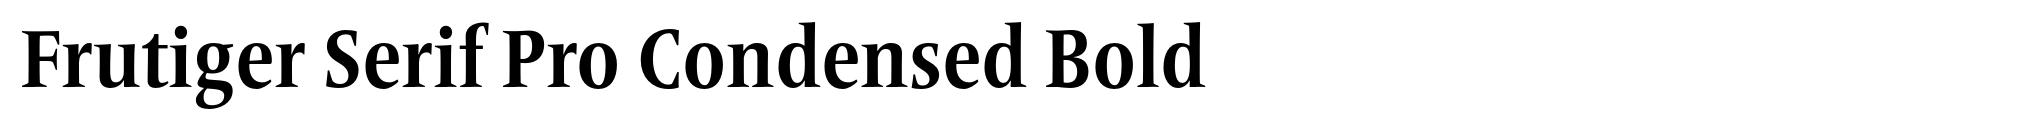 Frutiger Serif Pro Condensed Bold image